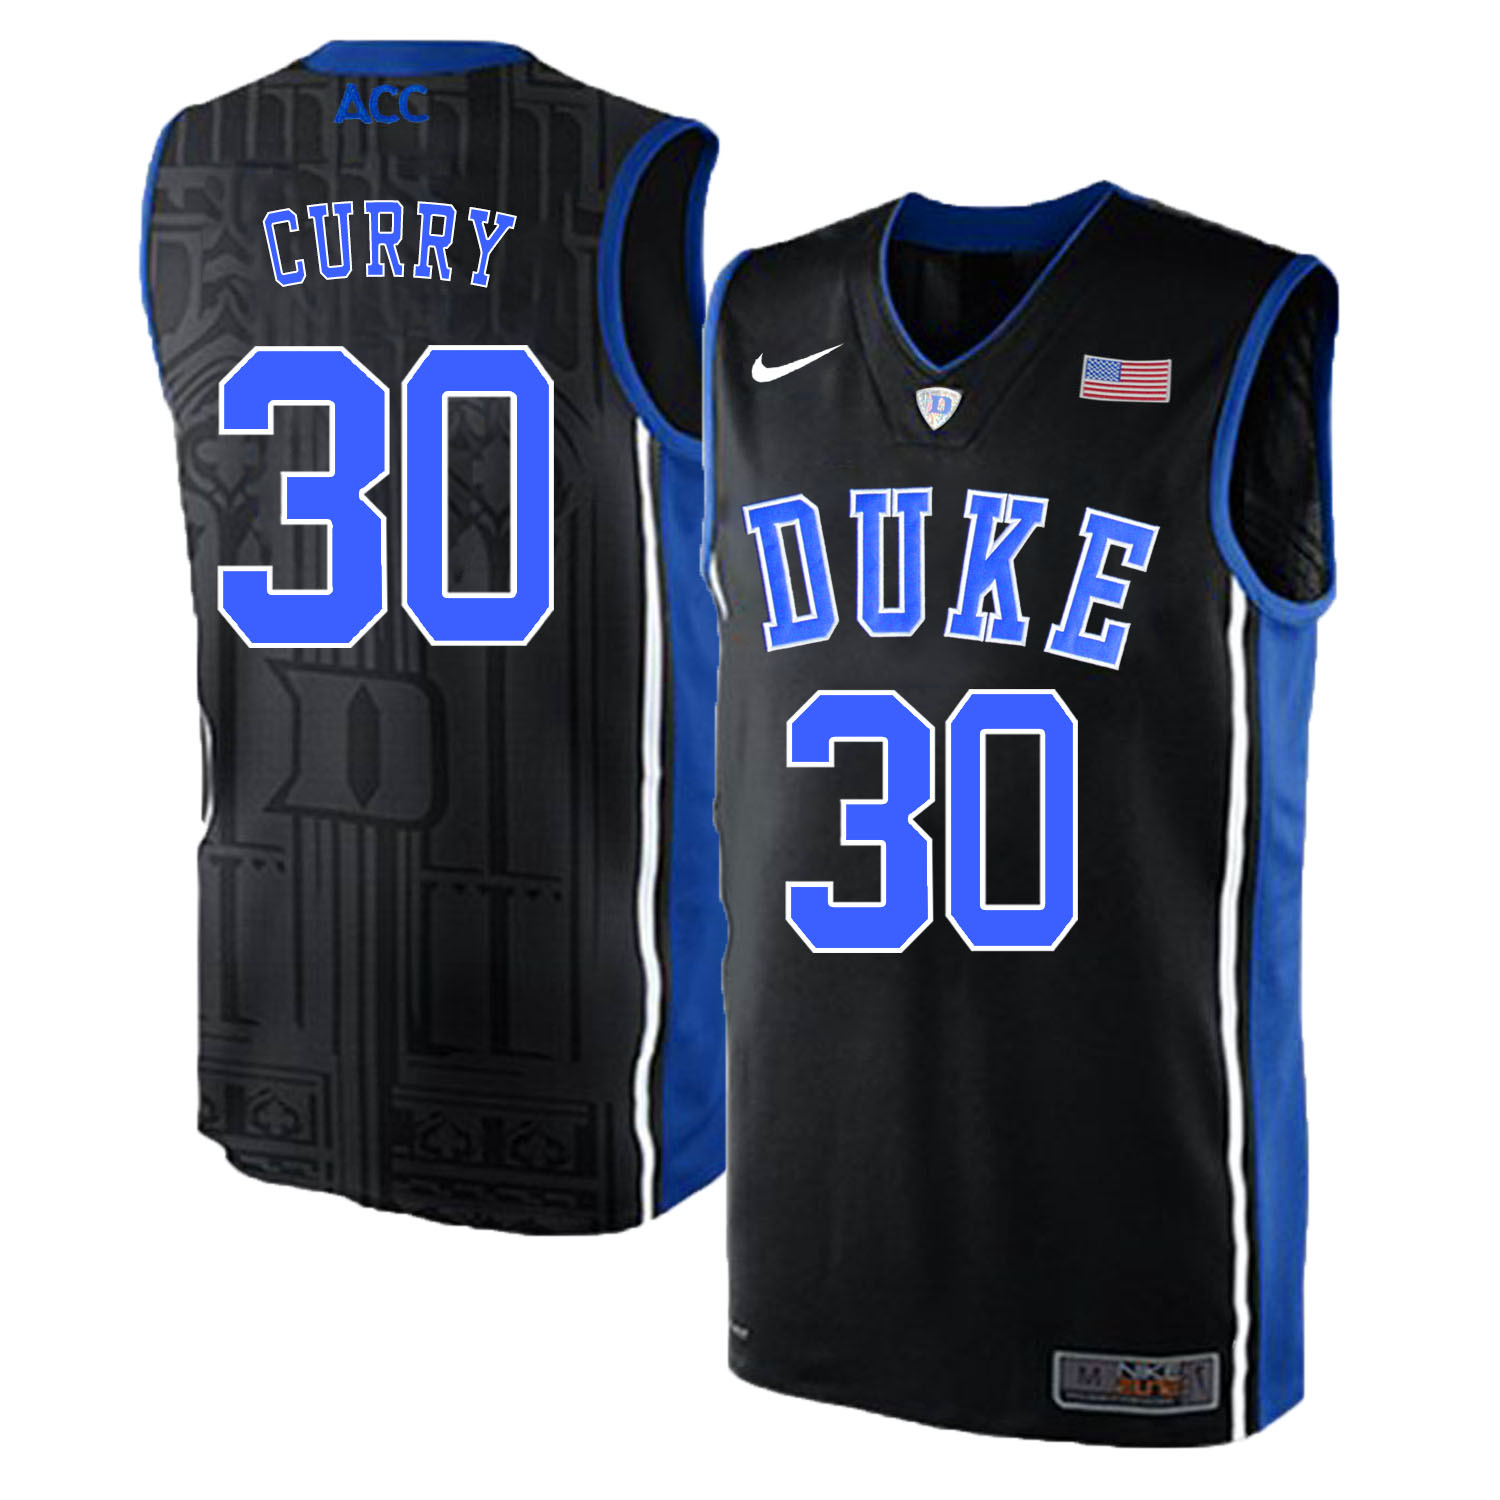 Duke Blue Devils 30 Seth Curry Black Elite Nike College Basketball Jersey